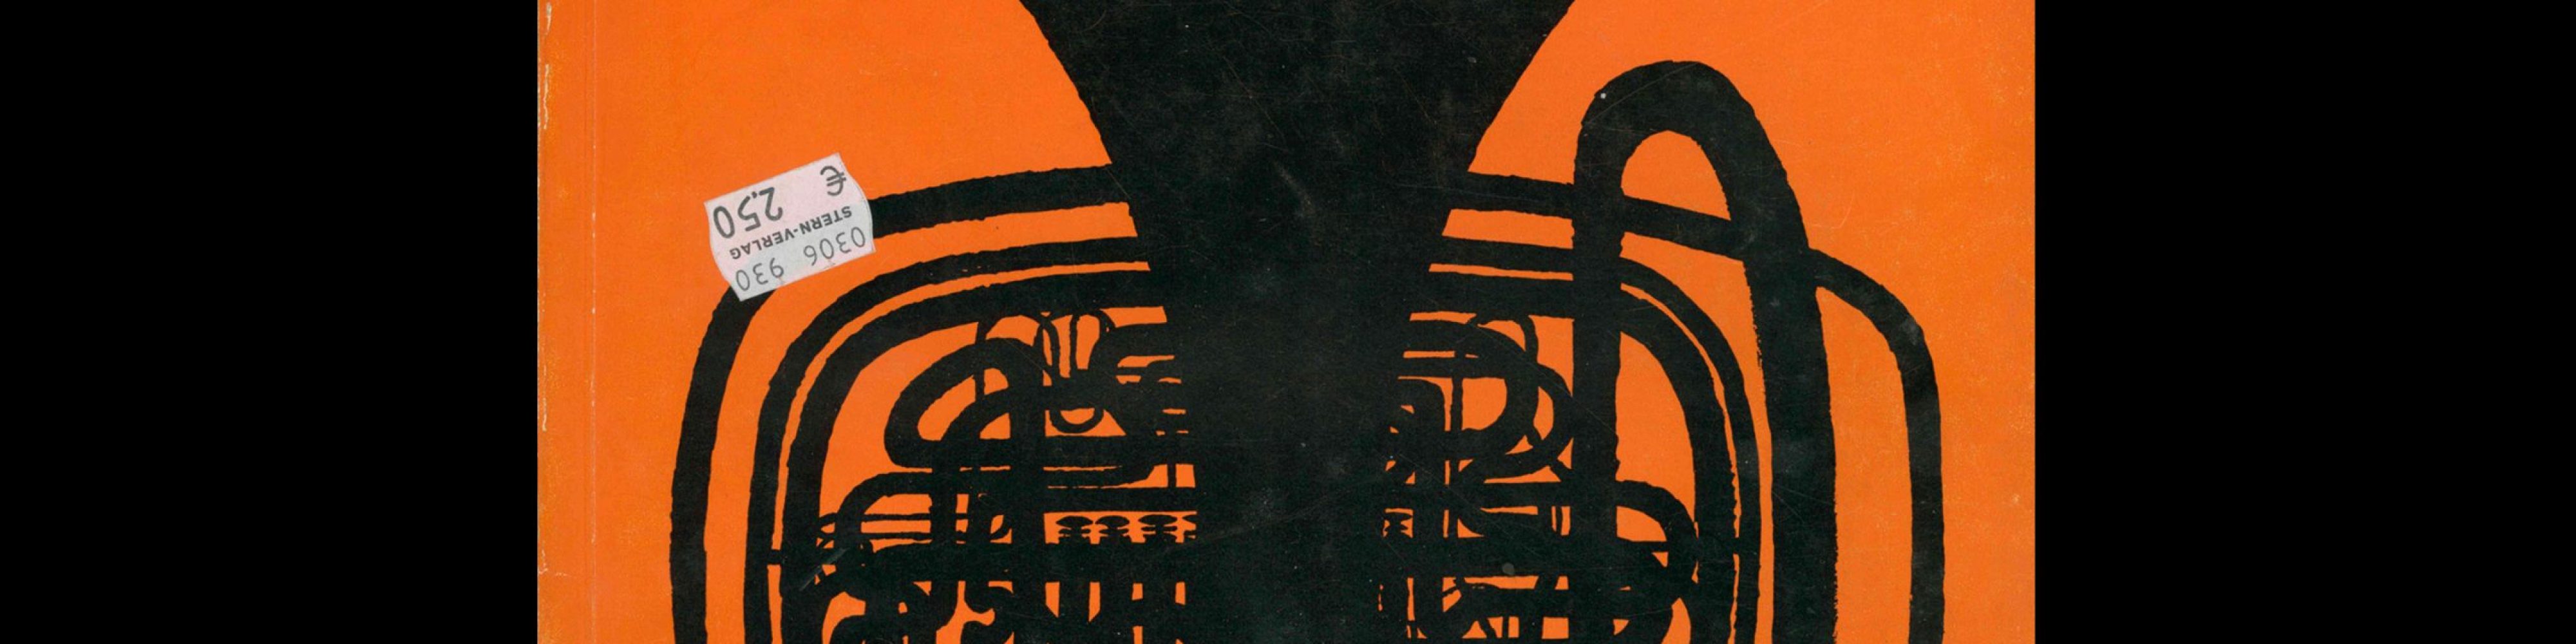 Gebrauchsgraphik, 9, 1959. Cover design by Giancarlo Iliprandi